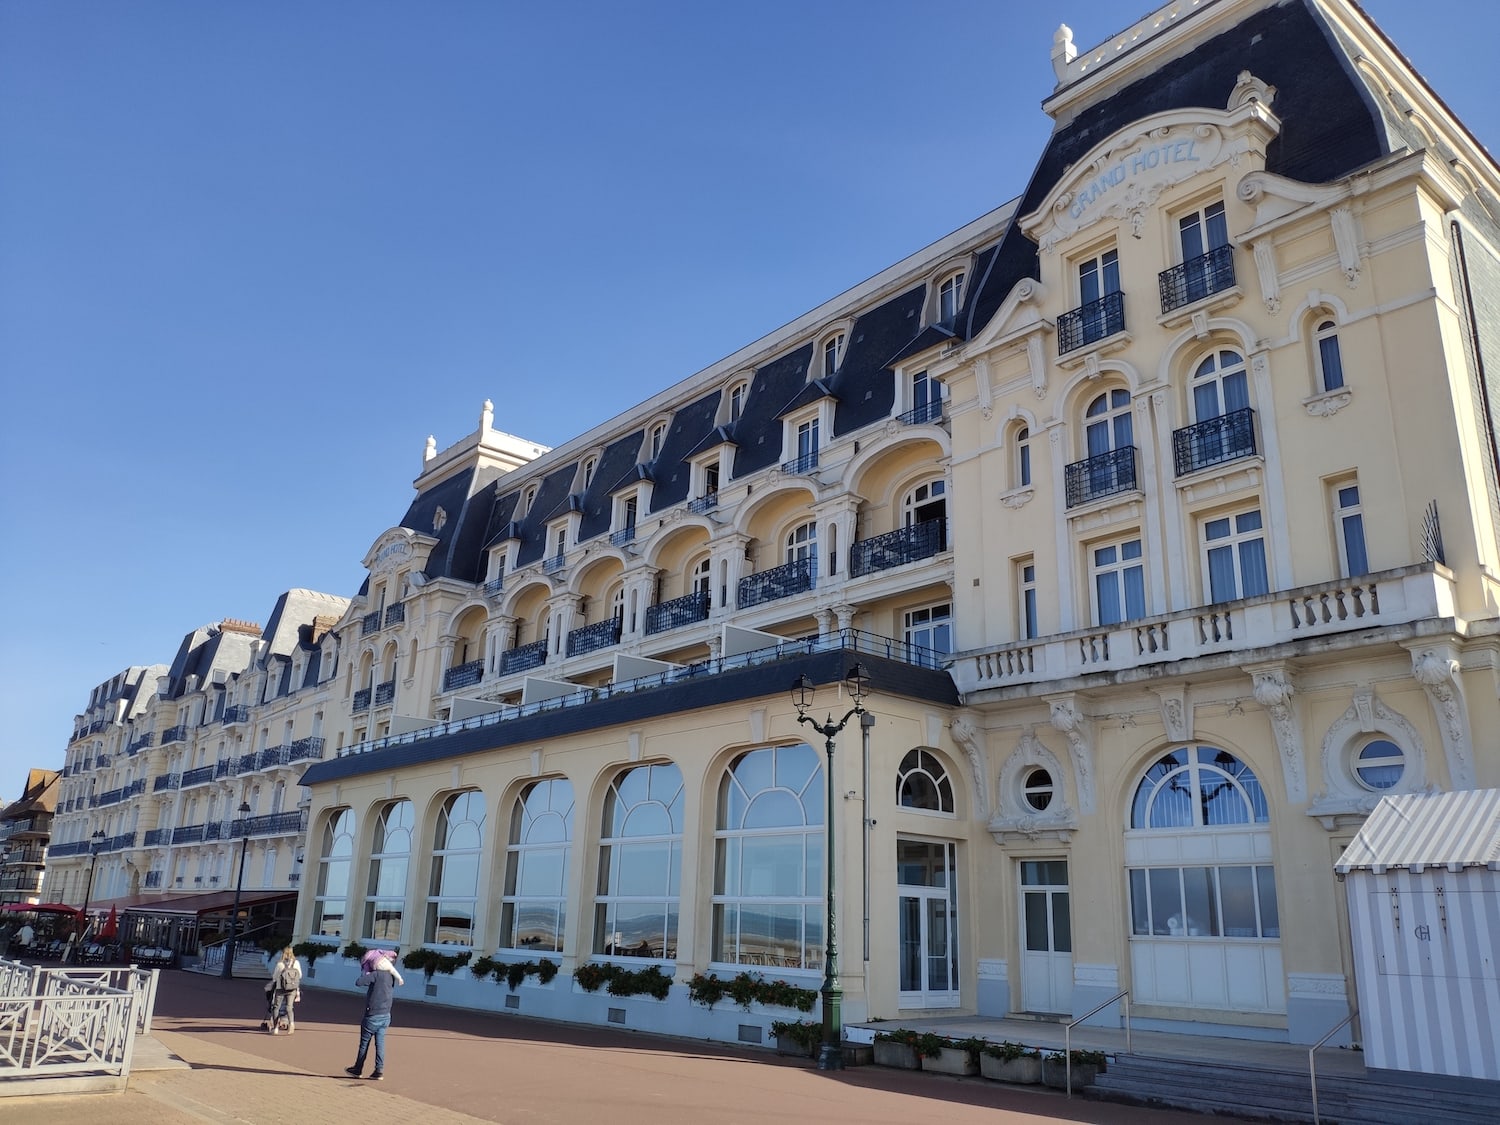 Hargos grand Hotel Nantes 2022